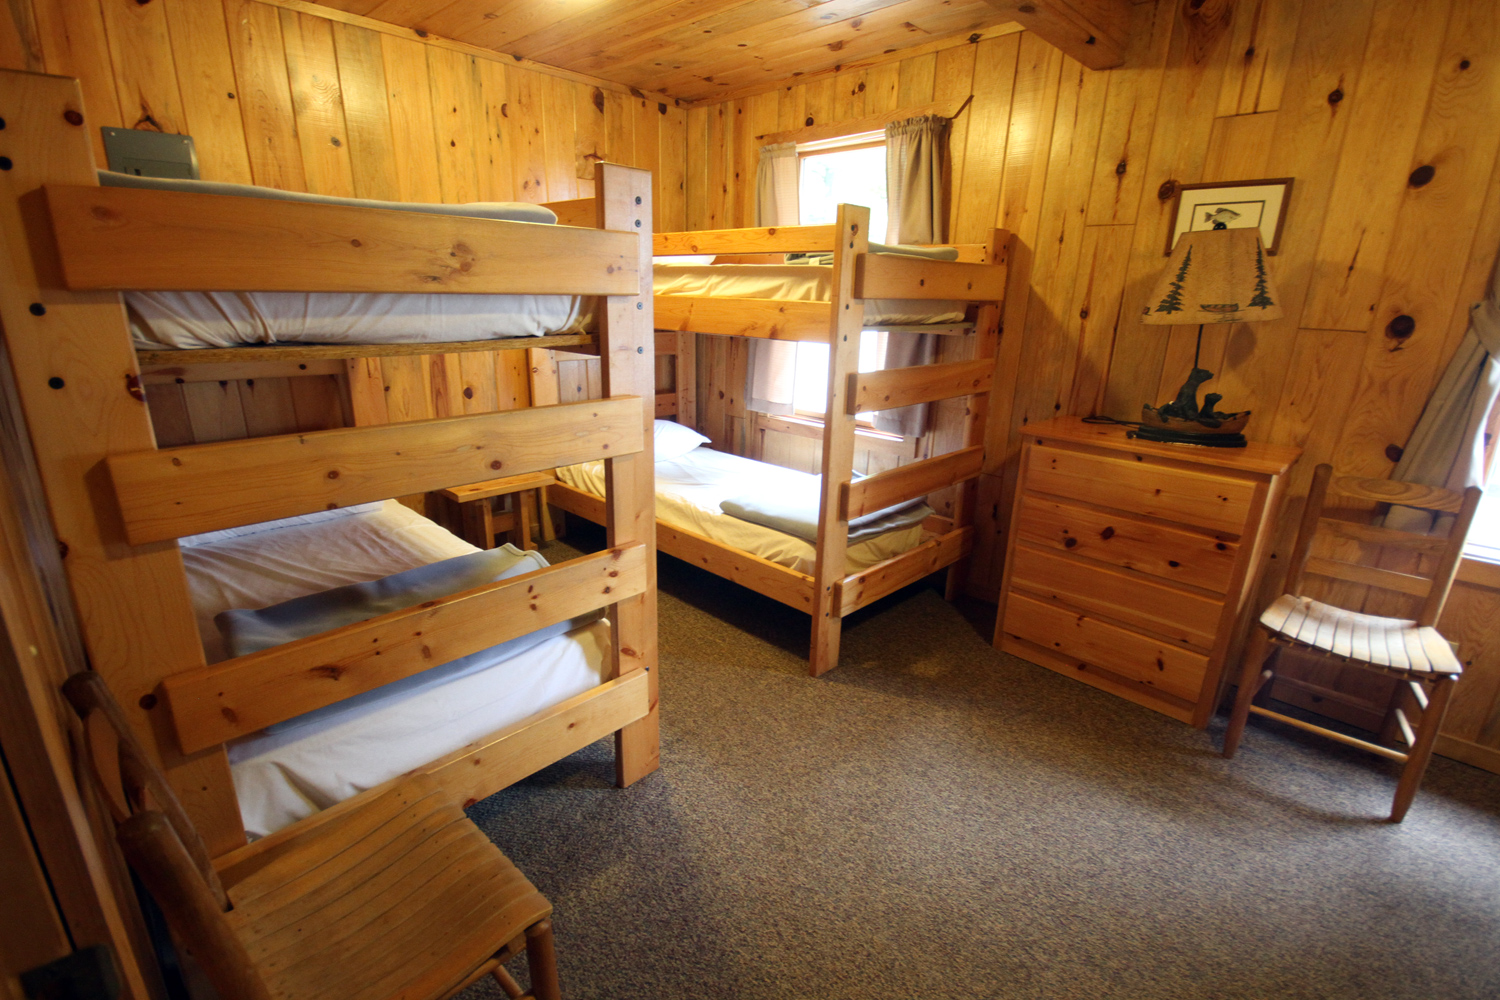 Large bunk room that sleeps 6